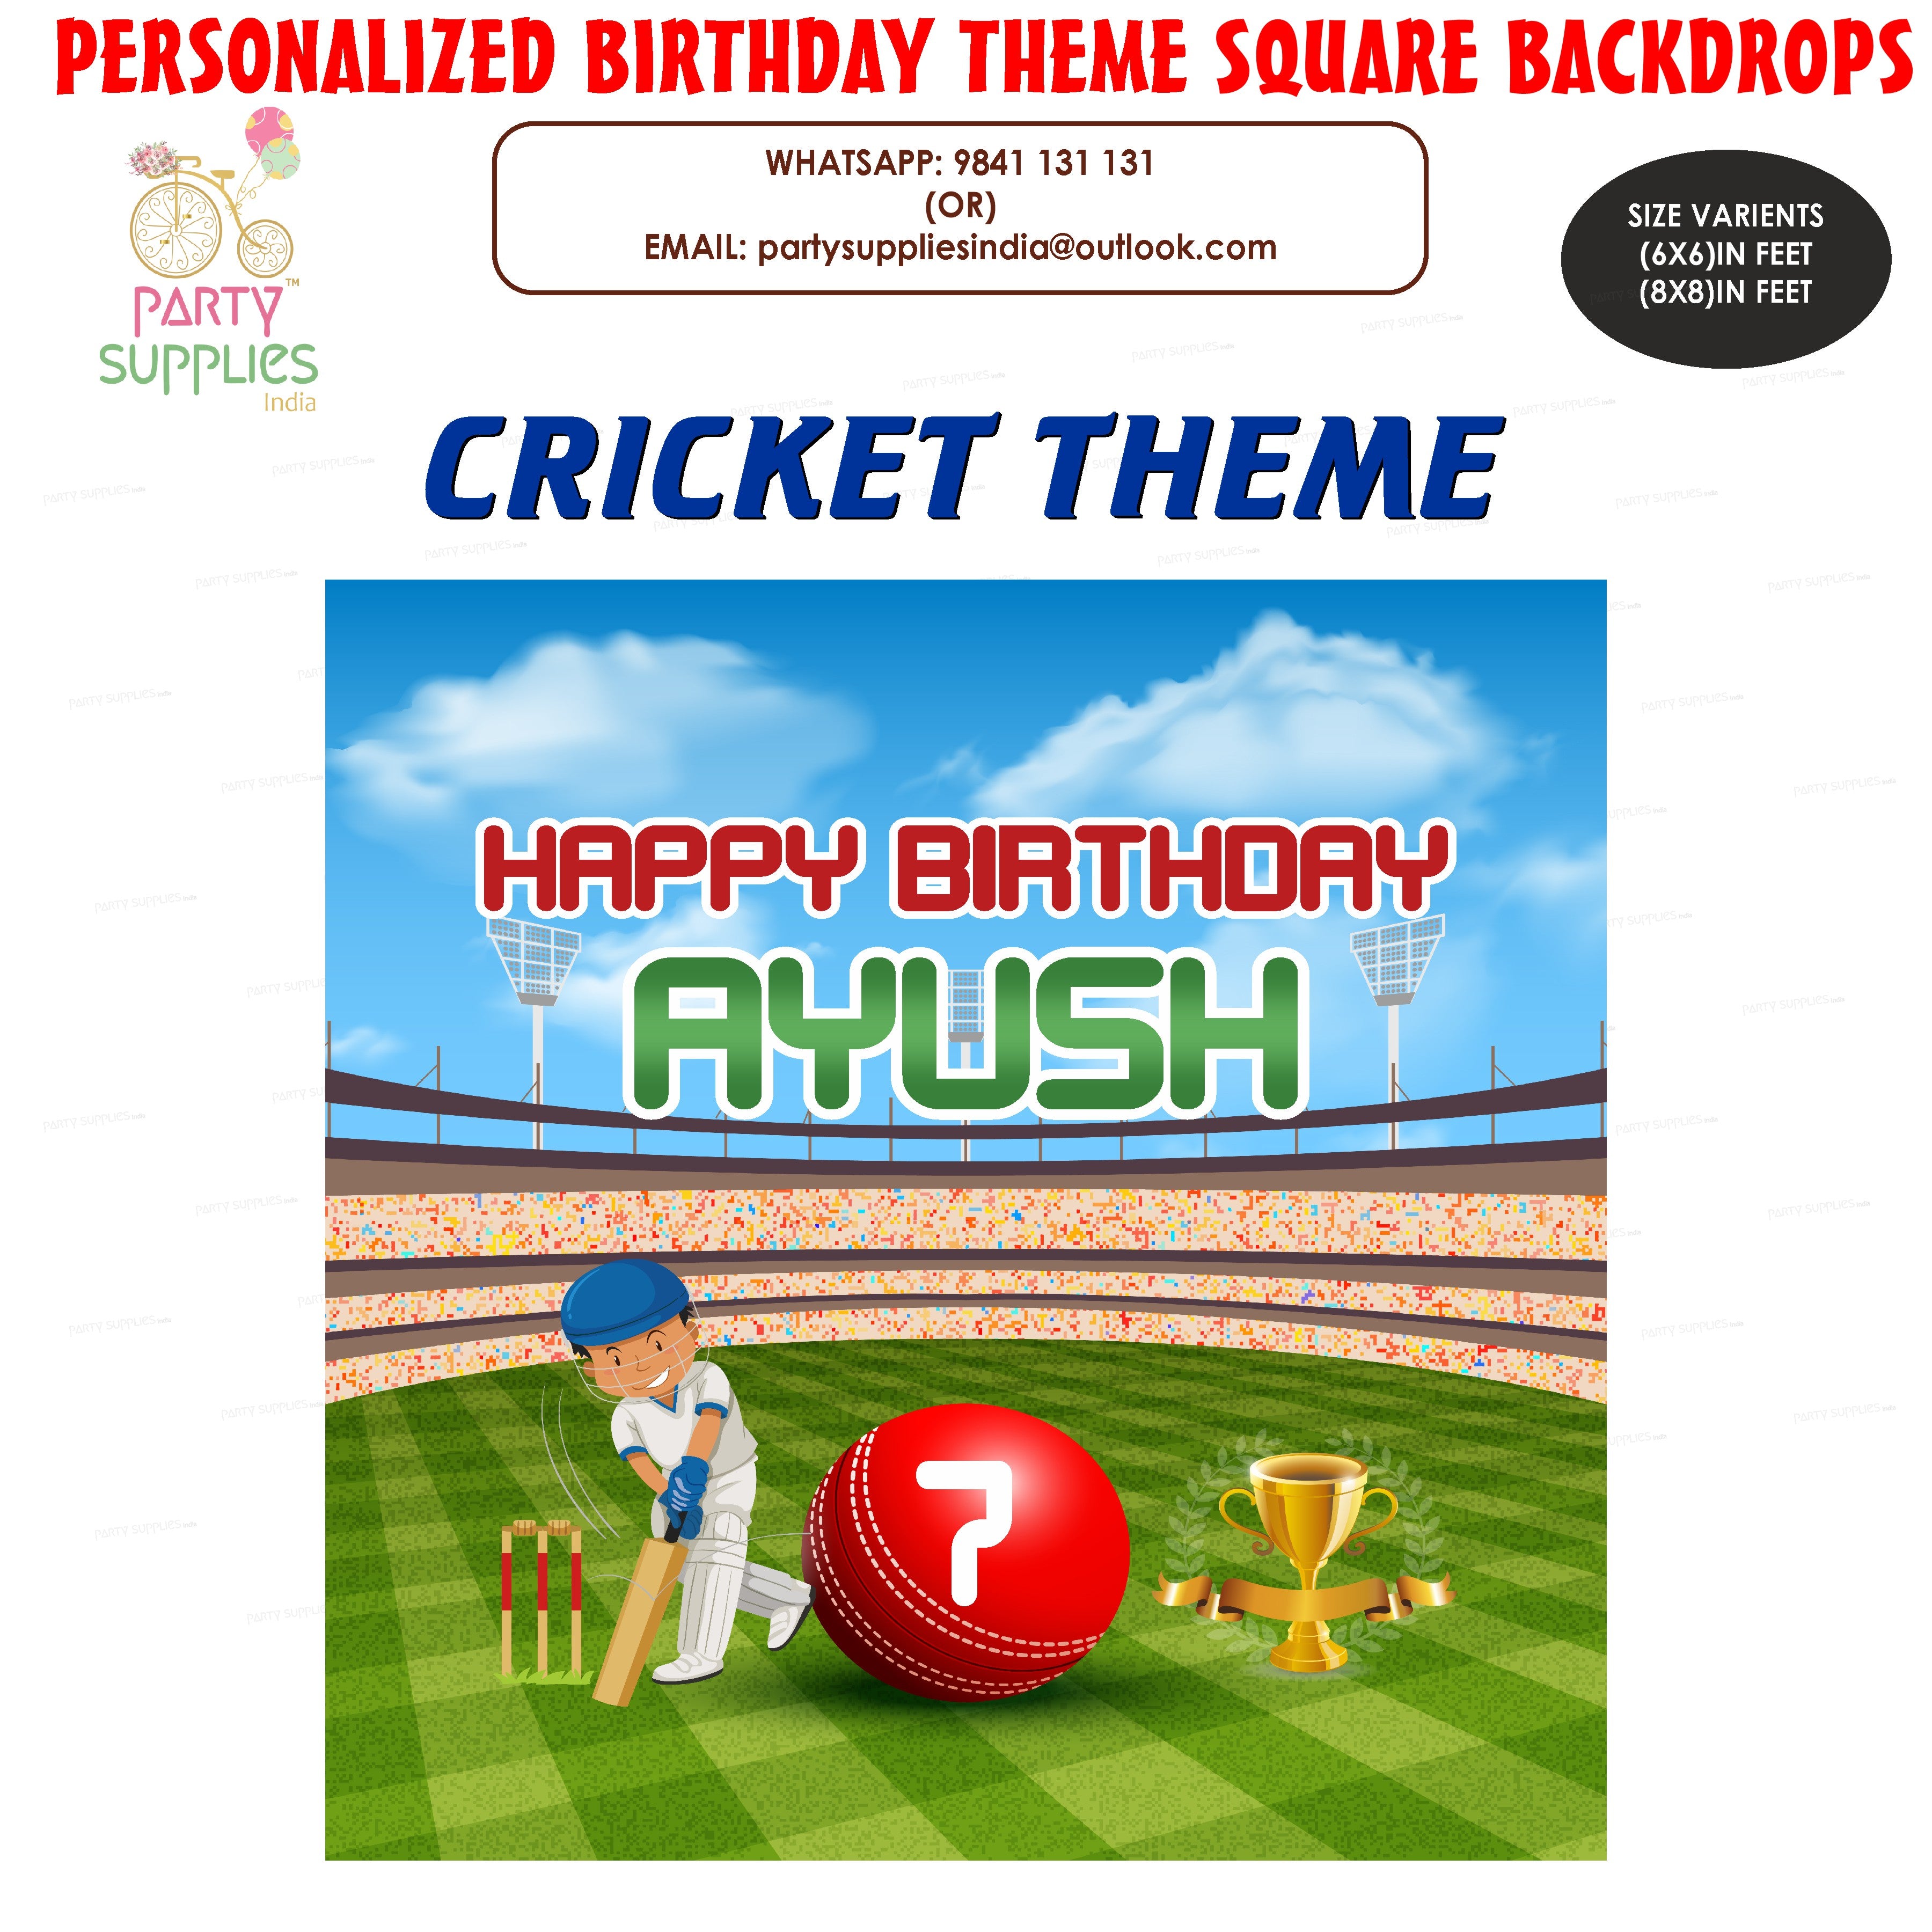 PSI Cricket Theme Personalized Square Backdrop